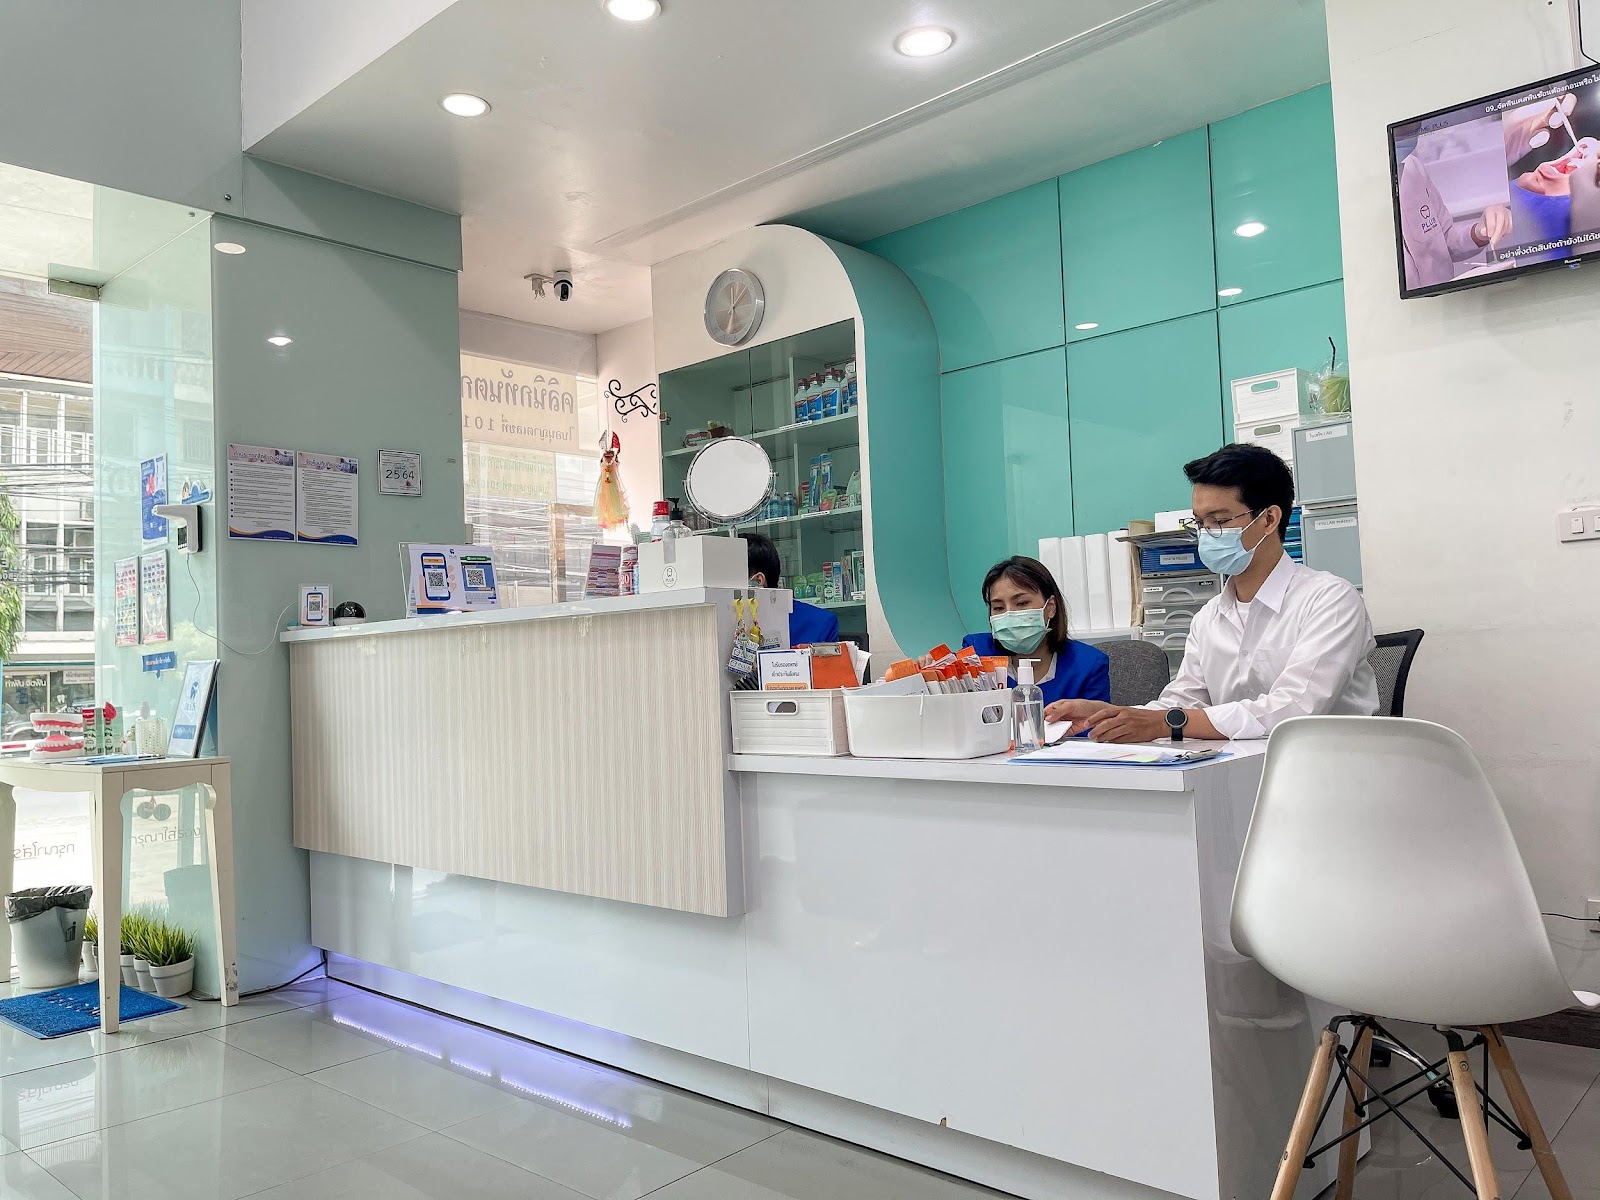 PLUS Dental clinic